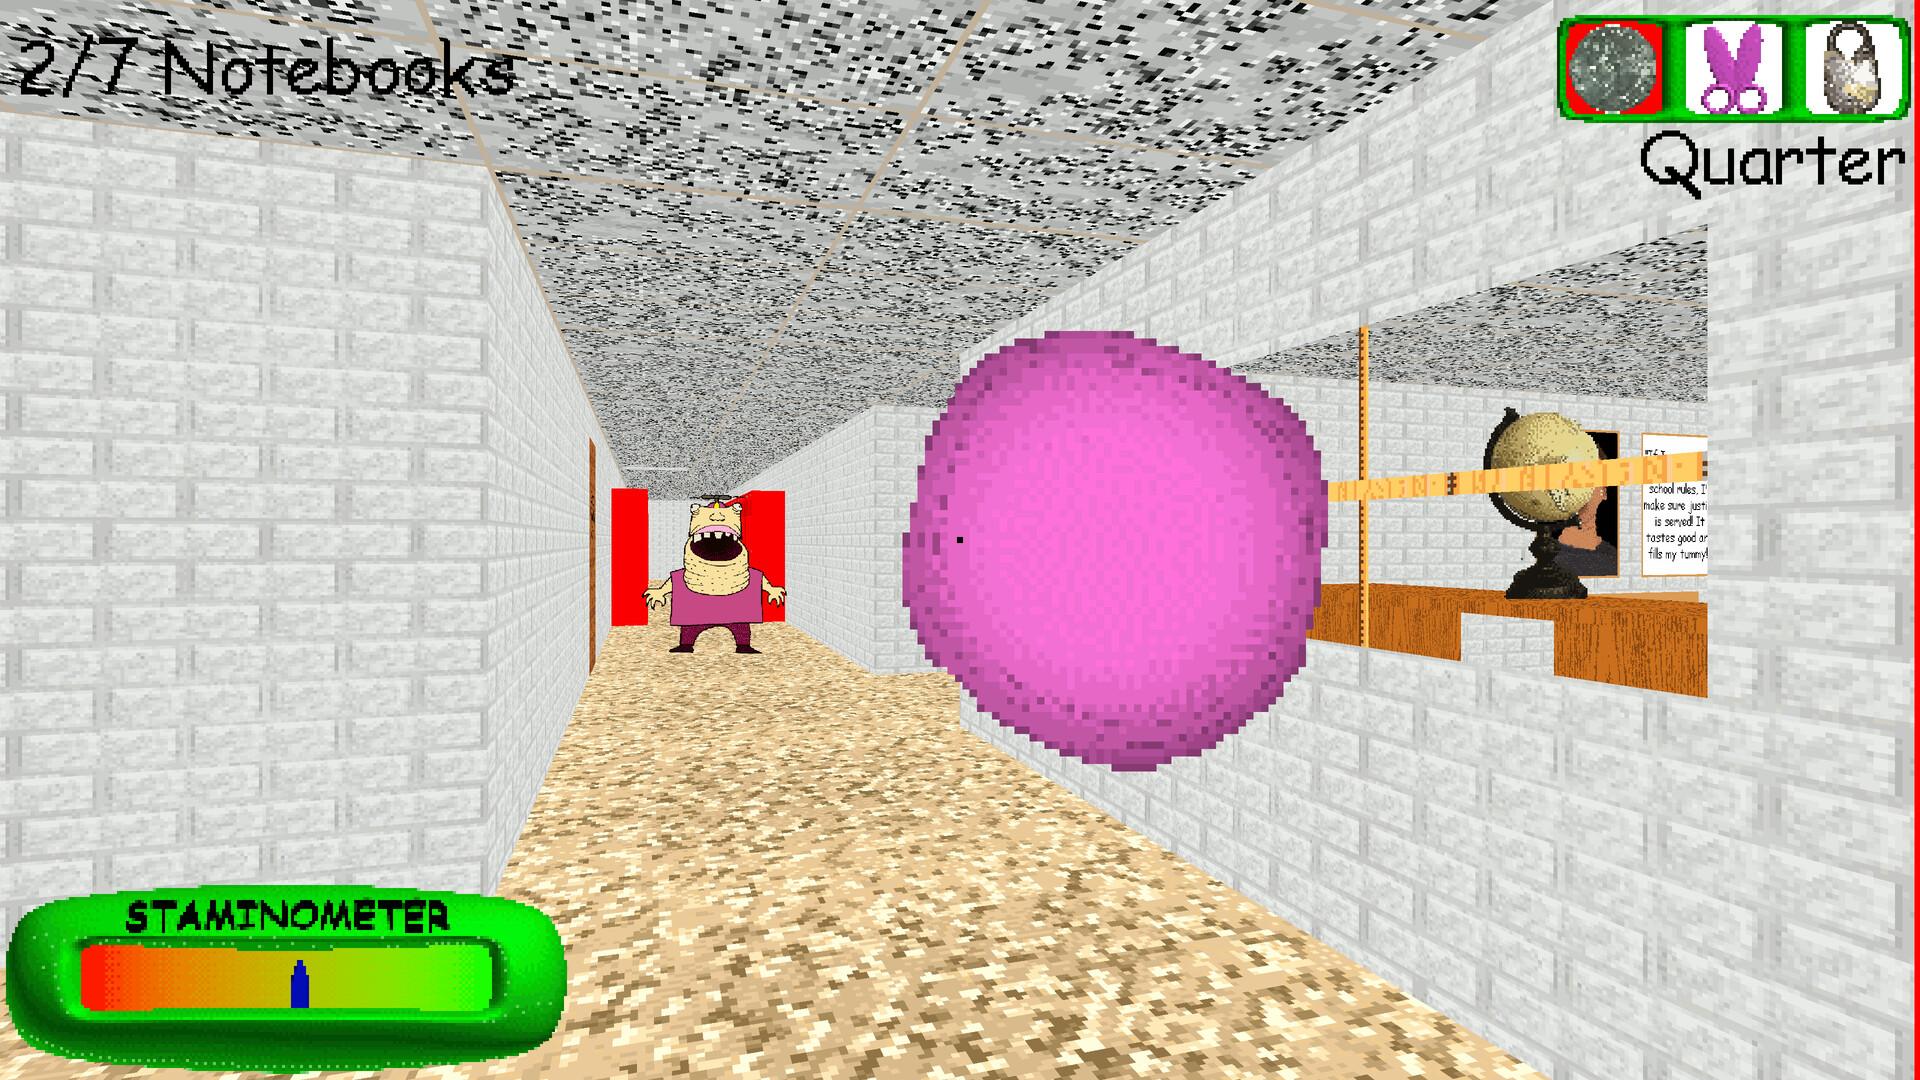 Screenshot №6 from game Baldi's Basics Classic Remastered